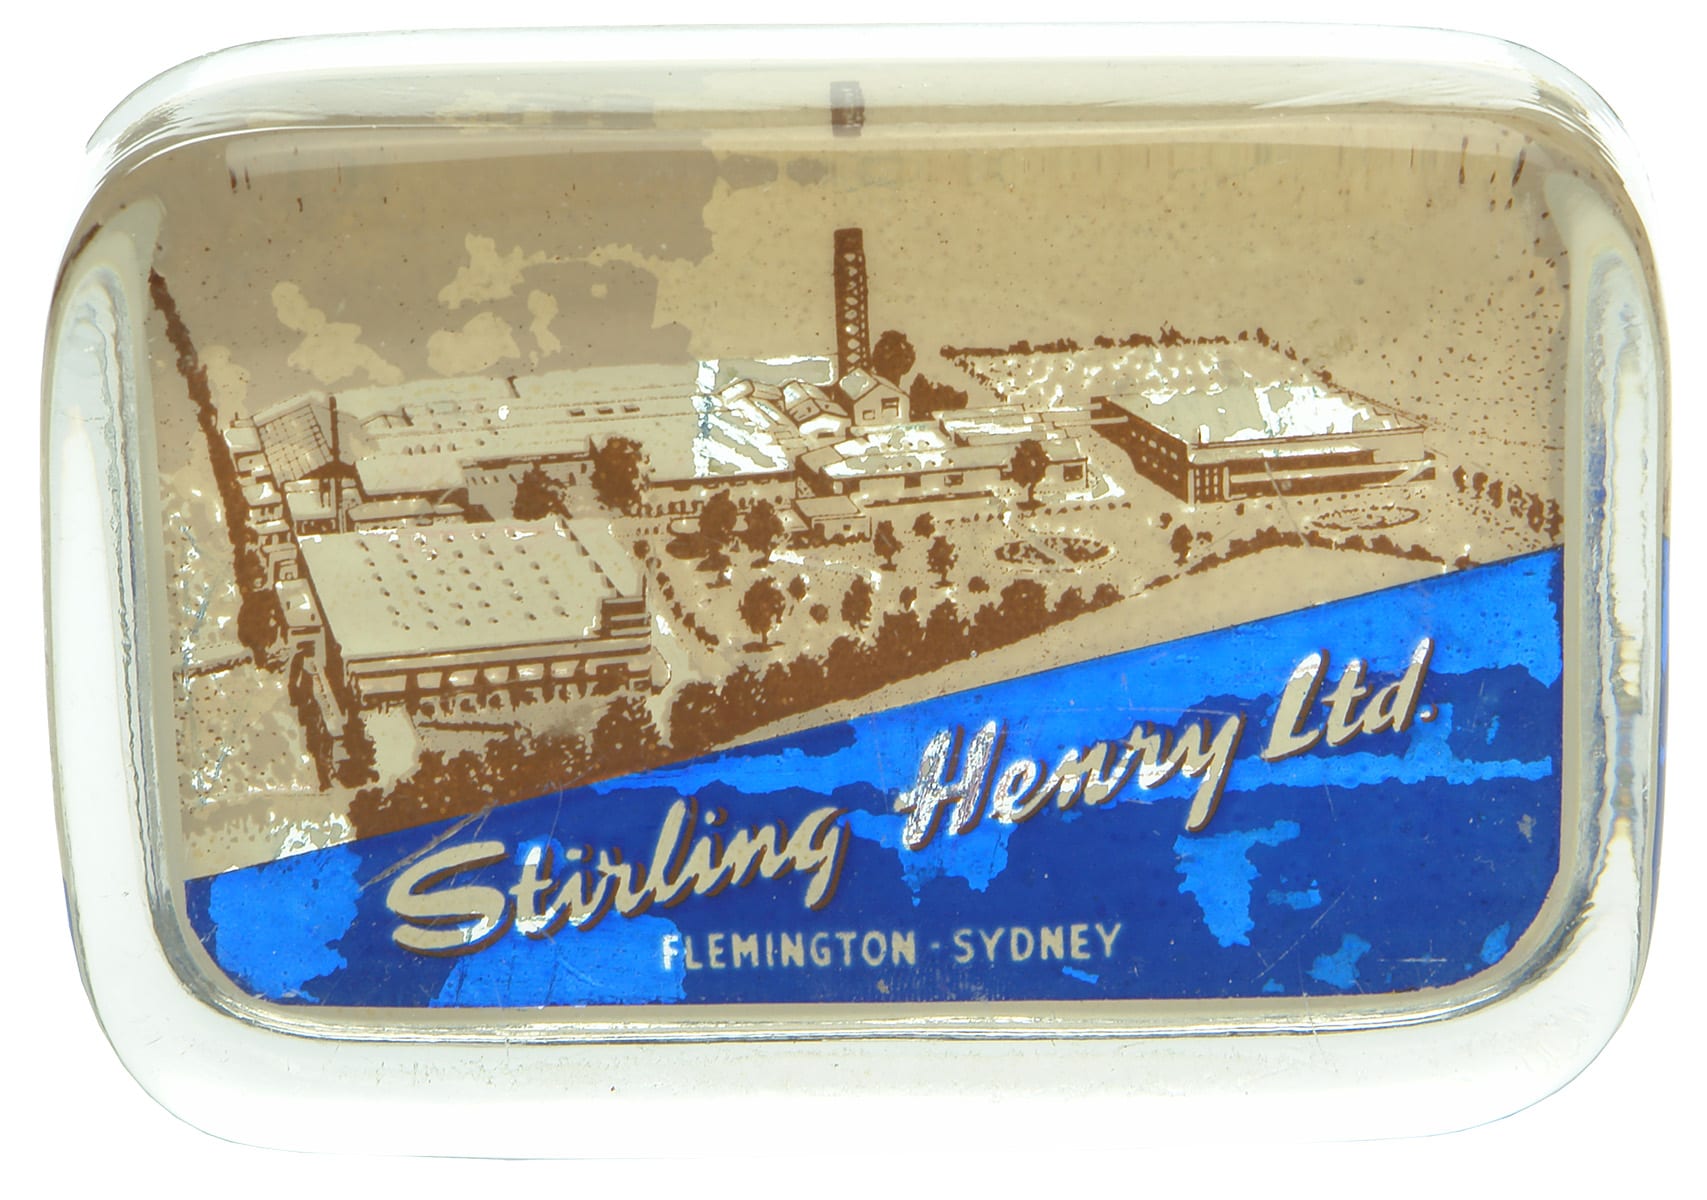 Stirling Henry Flemington Sydney Paper Weight